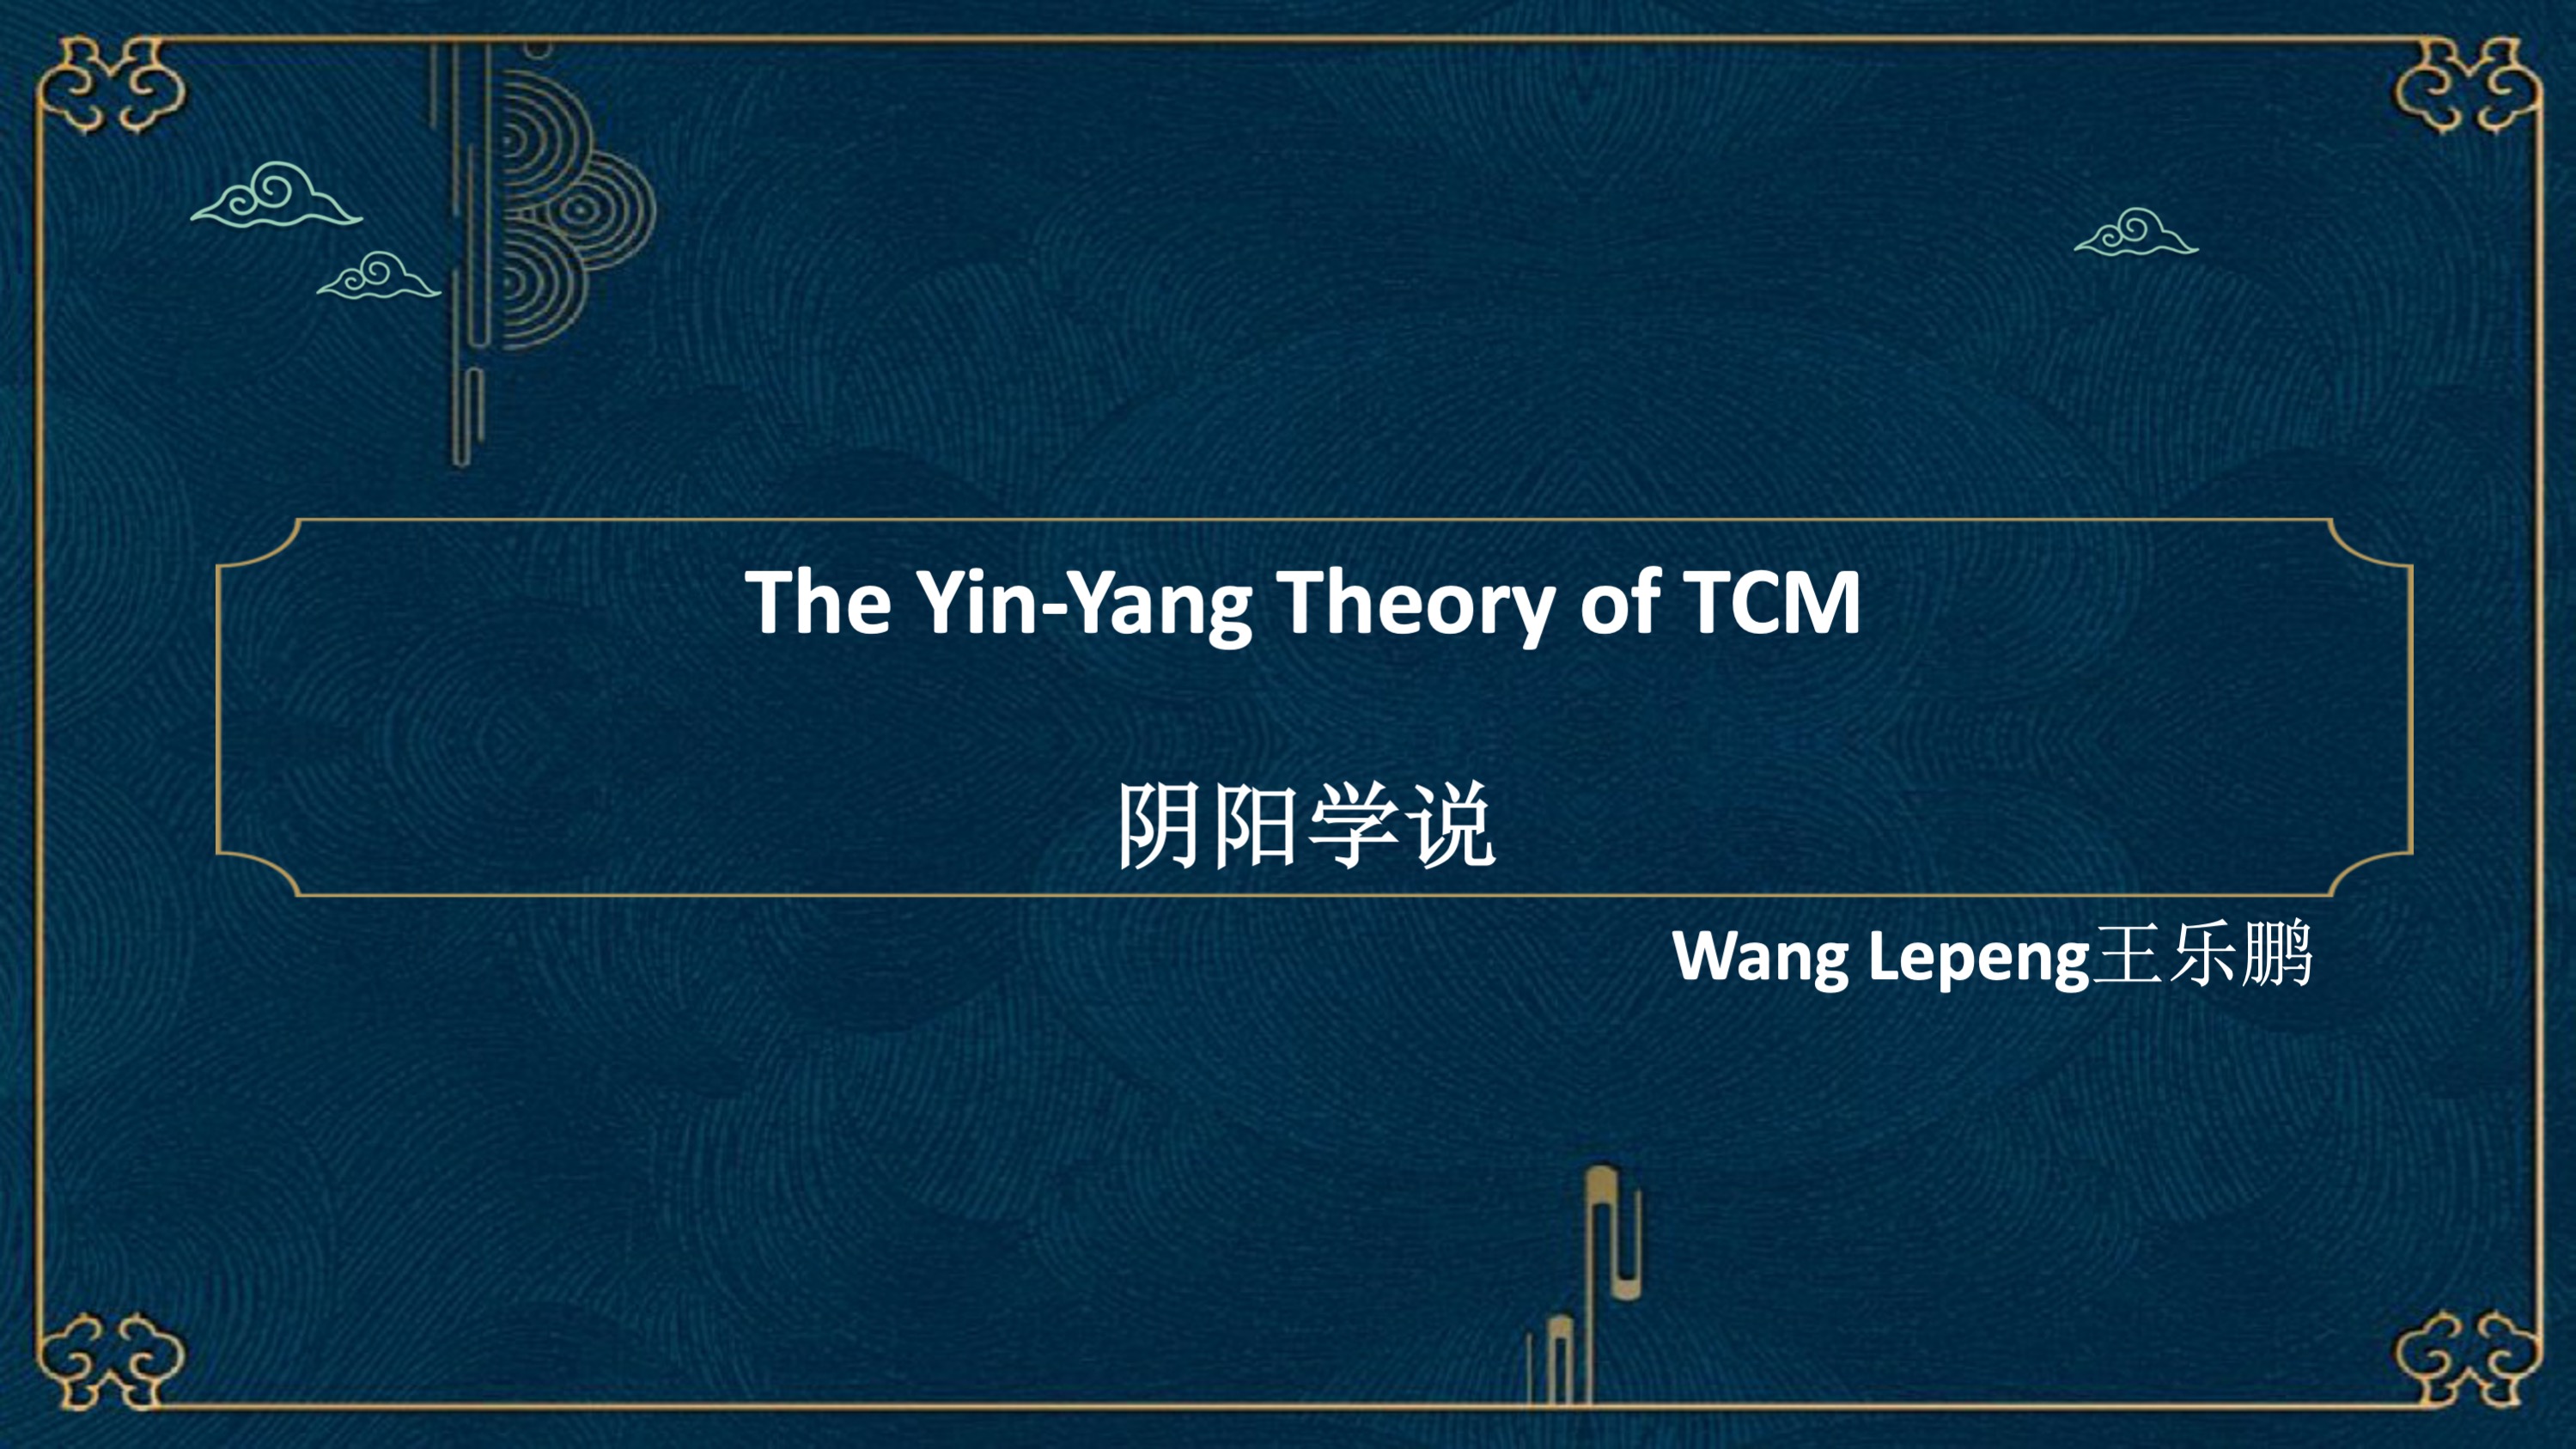 The Yin-Yang Theory of TCM